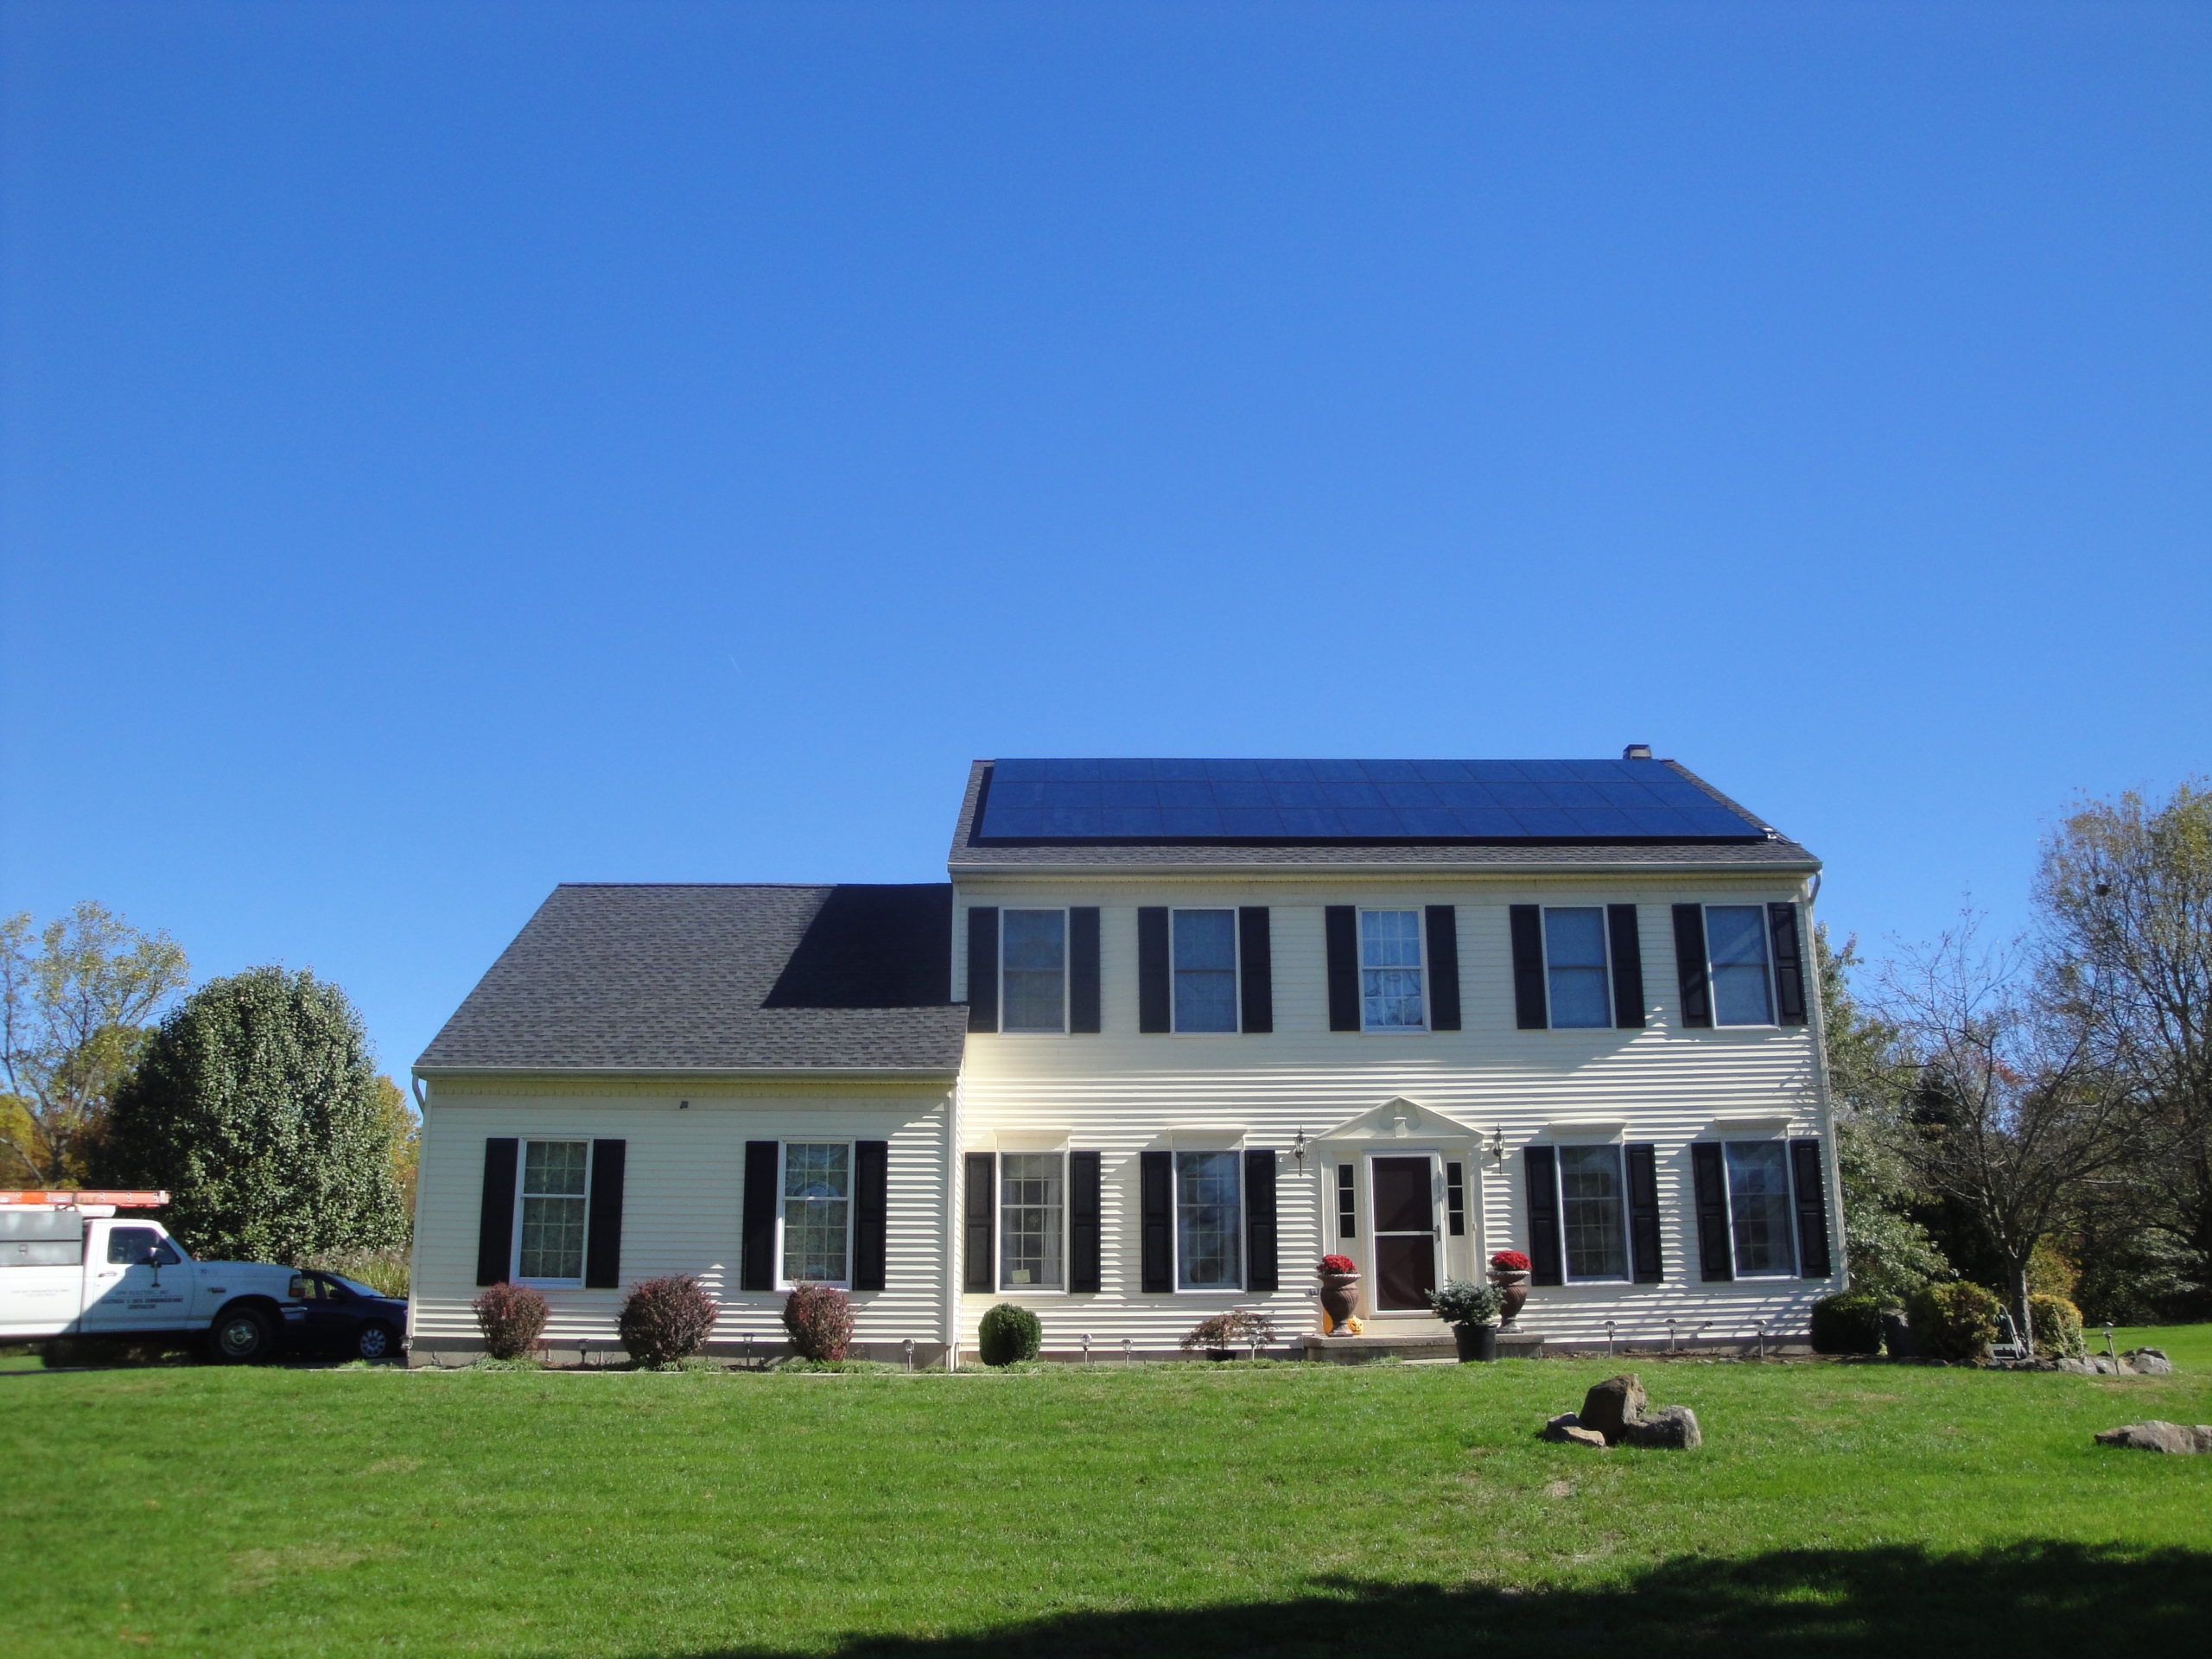 Suburb Home With SunPower Solar Panels